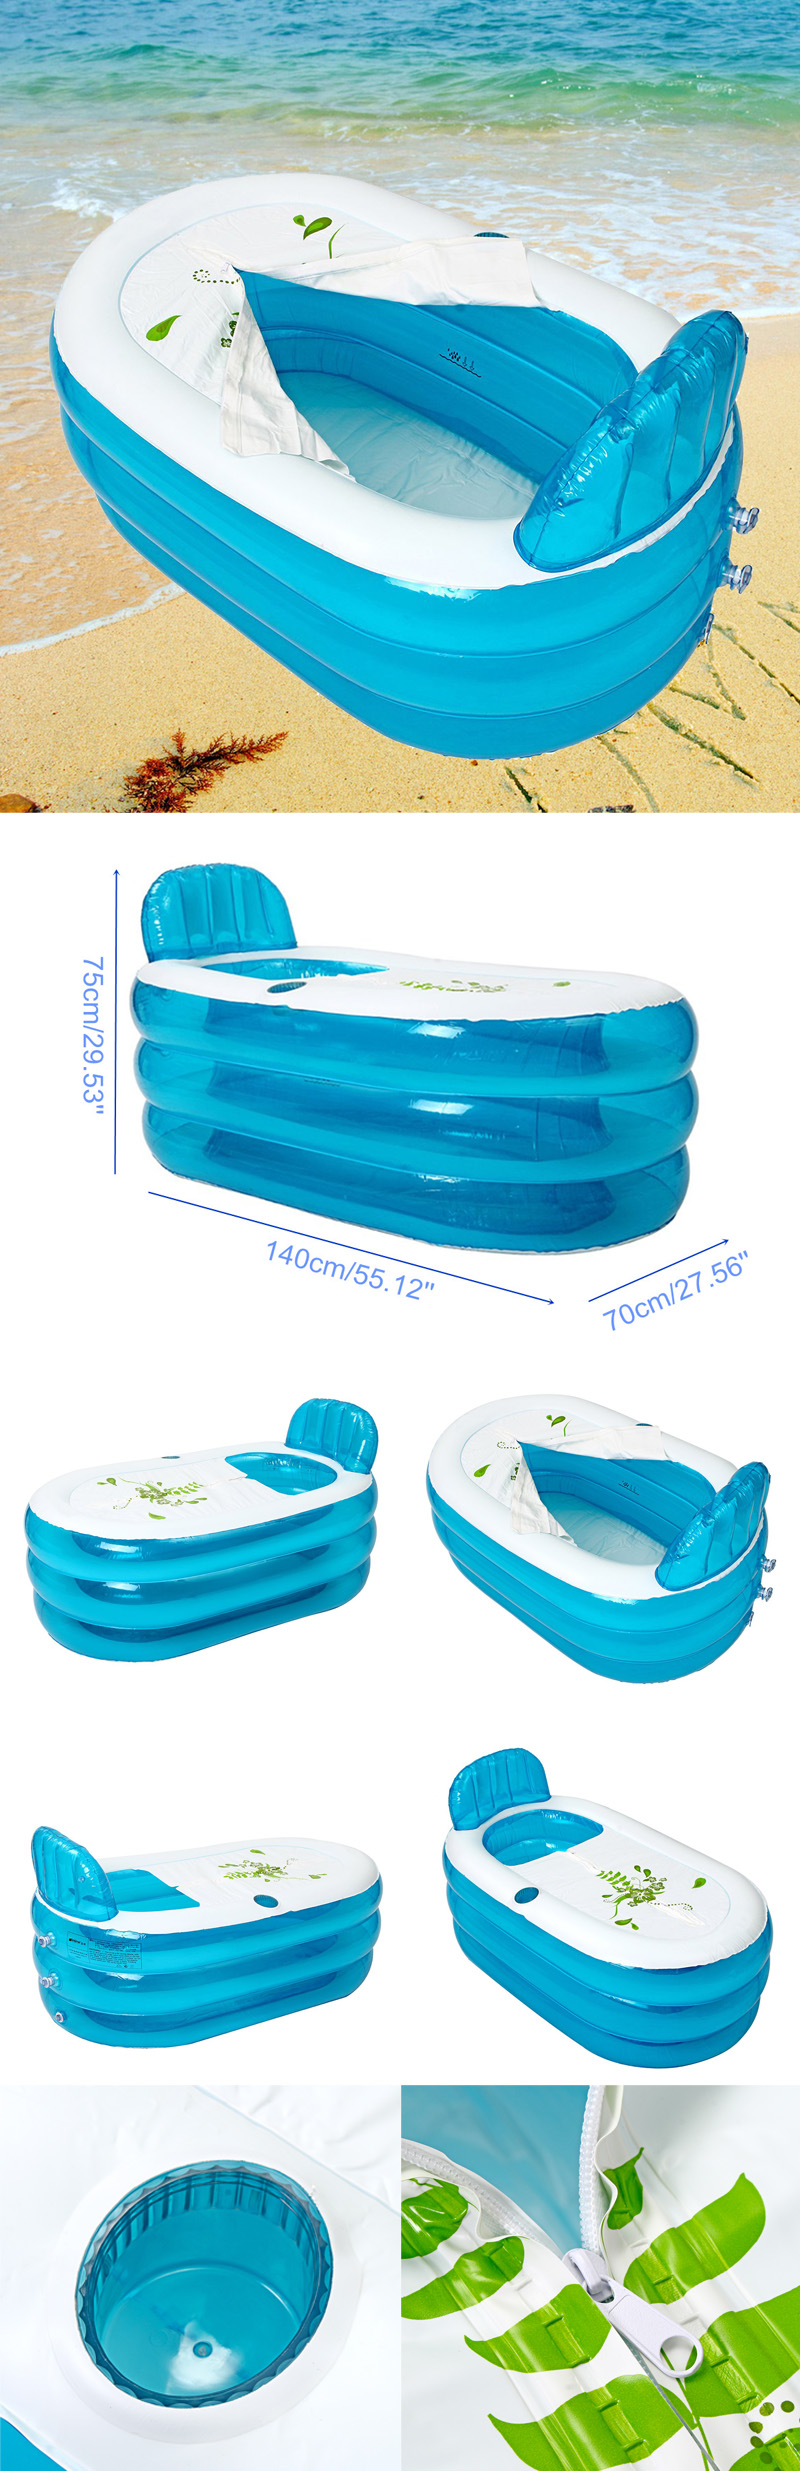 Inflatable Bathtub Portable Bath Tub PVC Camping Travel Folding SPA Bath With Cushion Pipe 11